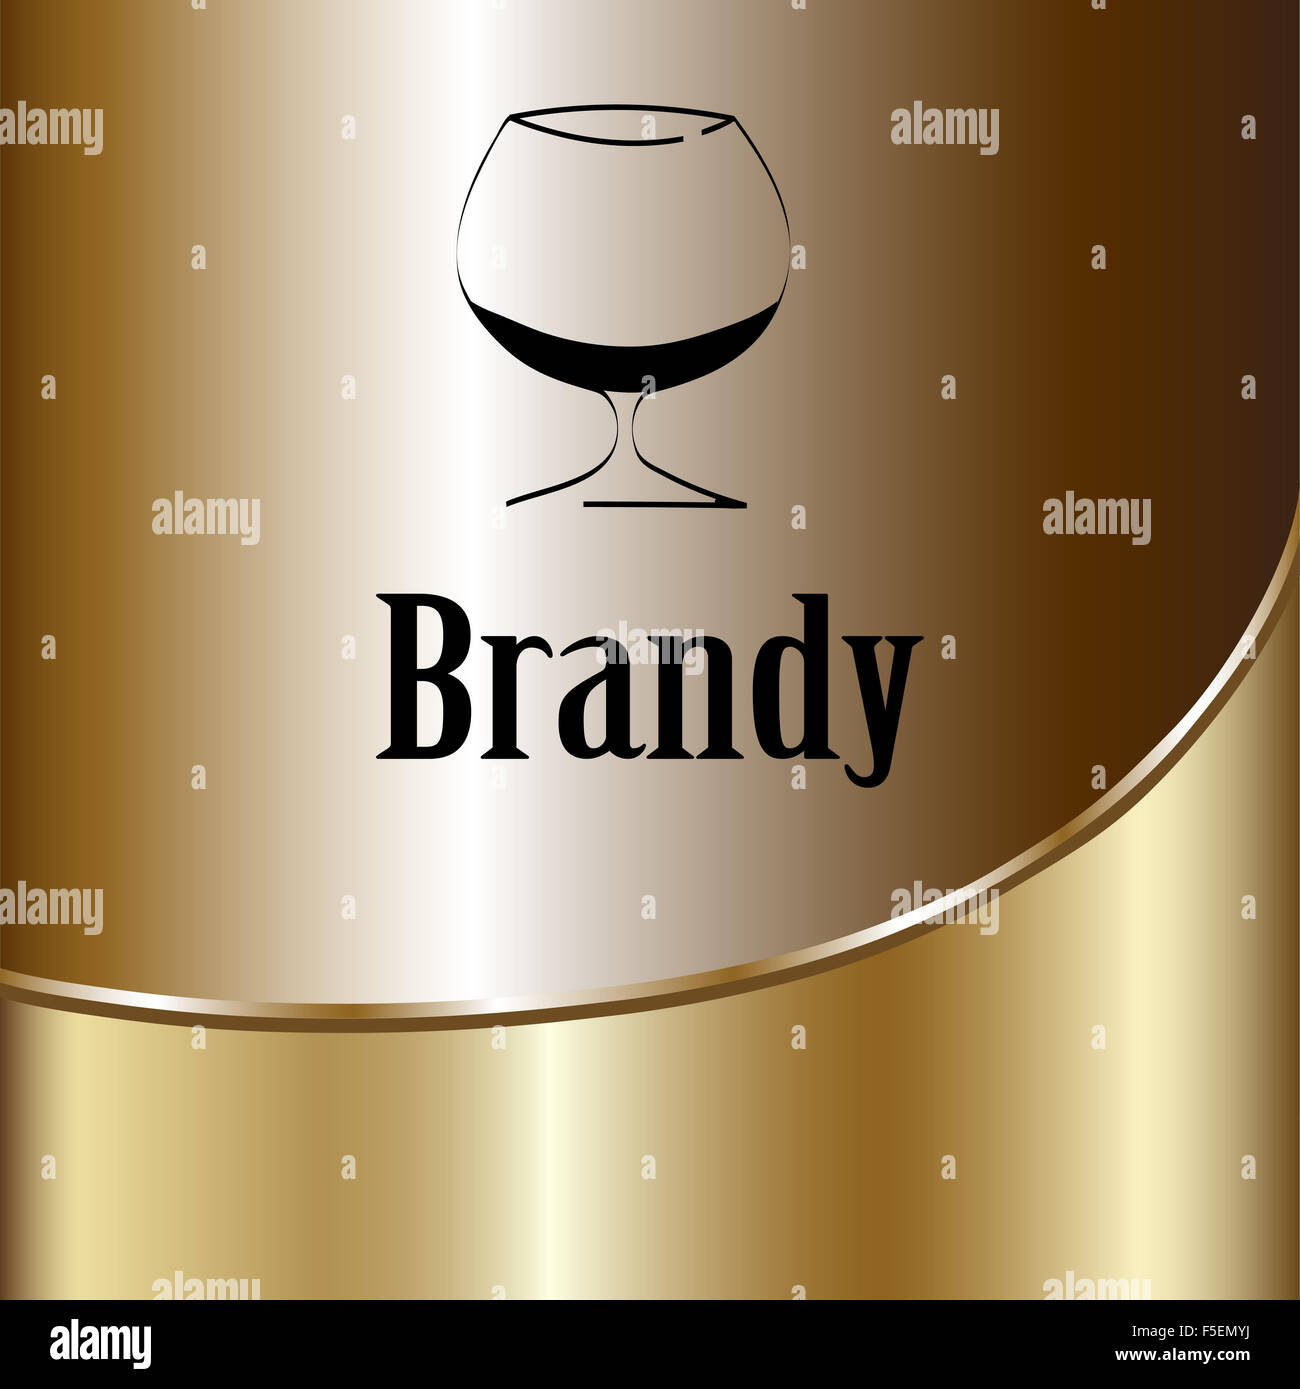 brandy glass design menu background. Vector Stock Photo